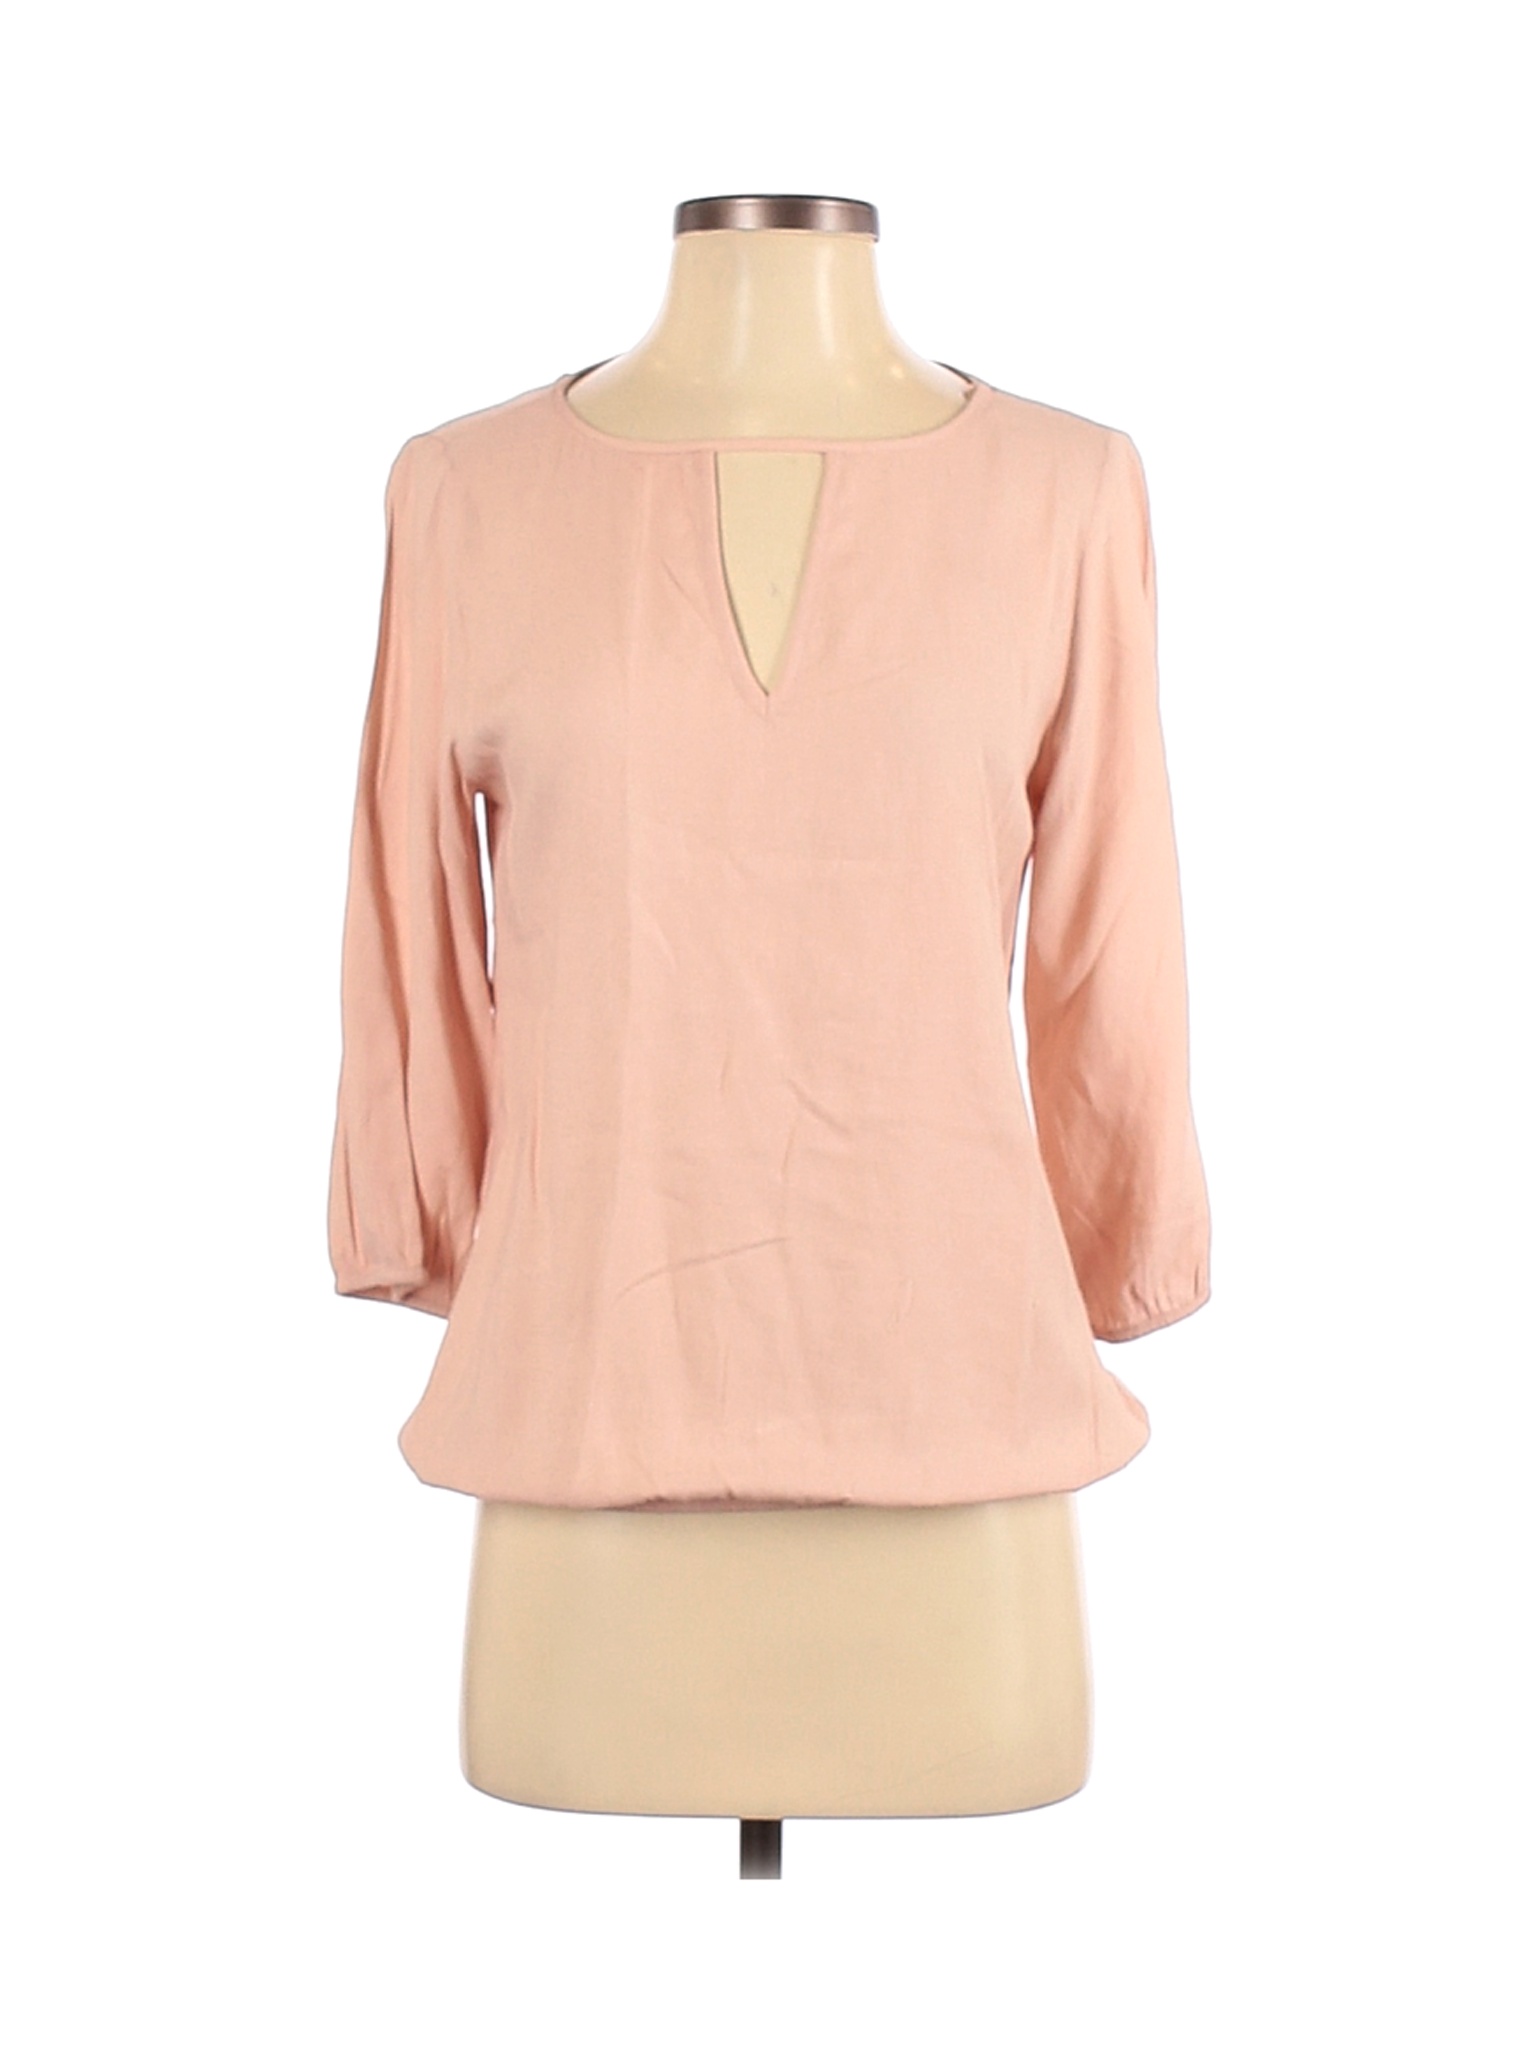 Zara Basic Women Pink Long Sleeve Blouse S | eBay